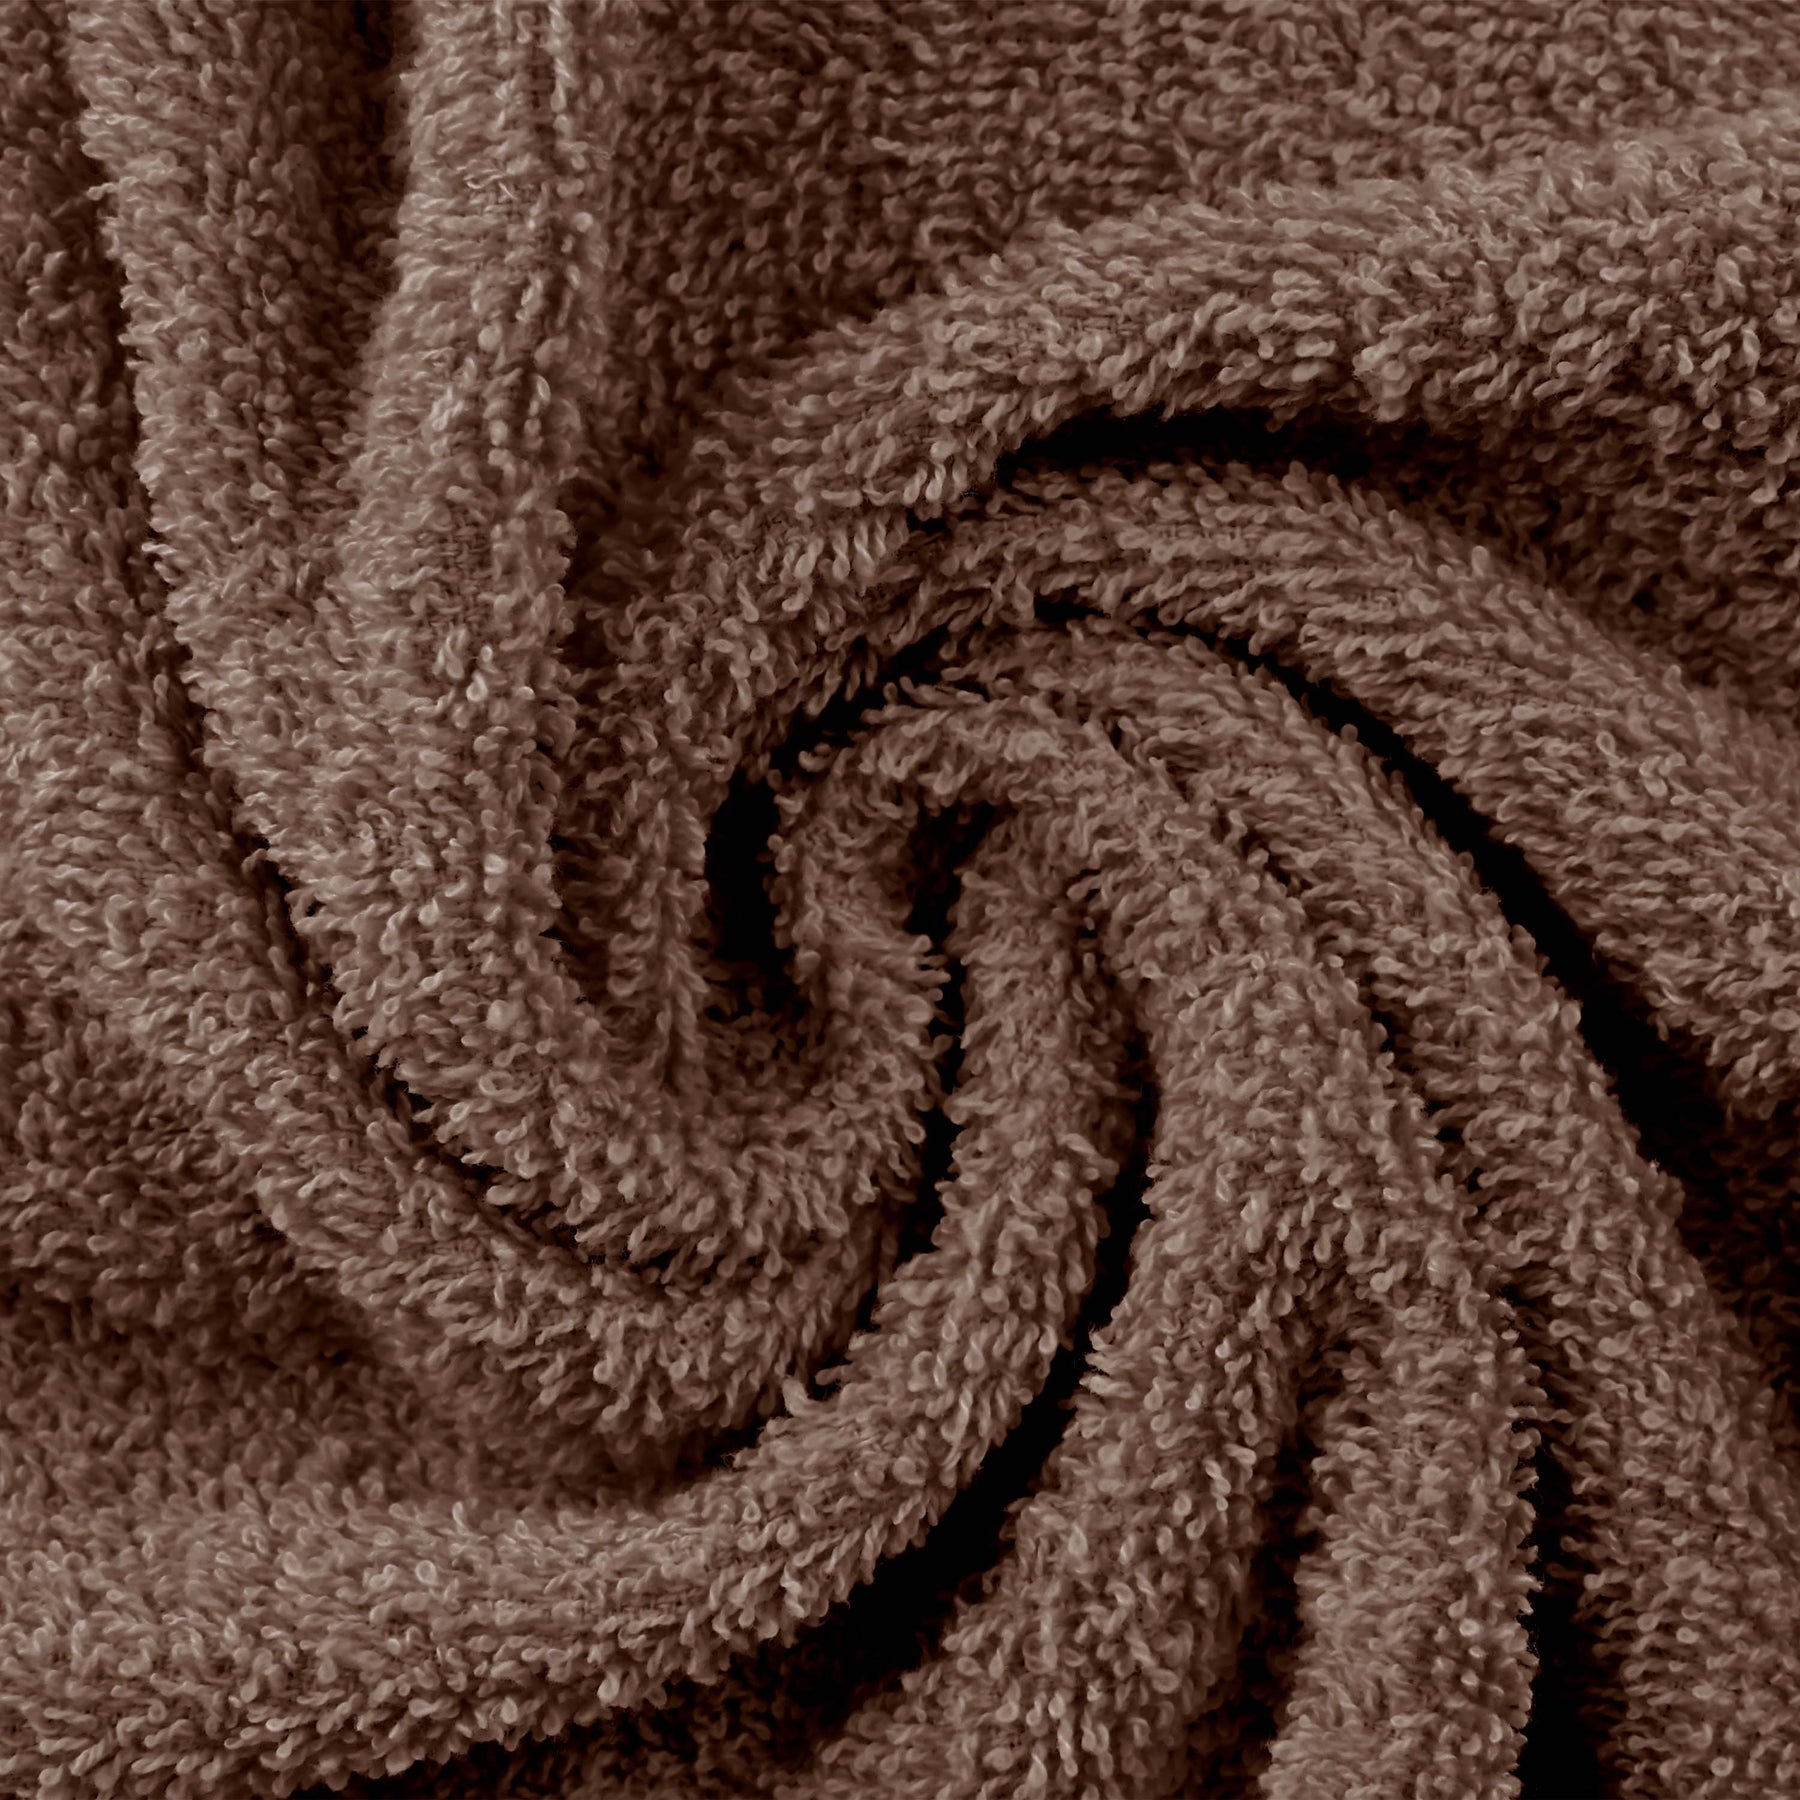 Eco-Friendly Ring Spun Cotton Towel Set - Coffee